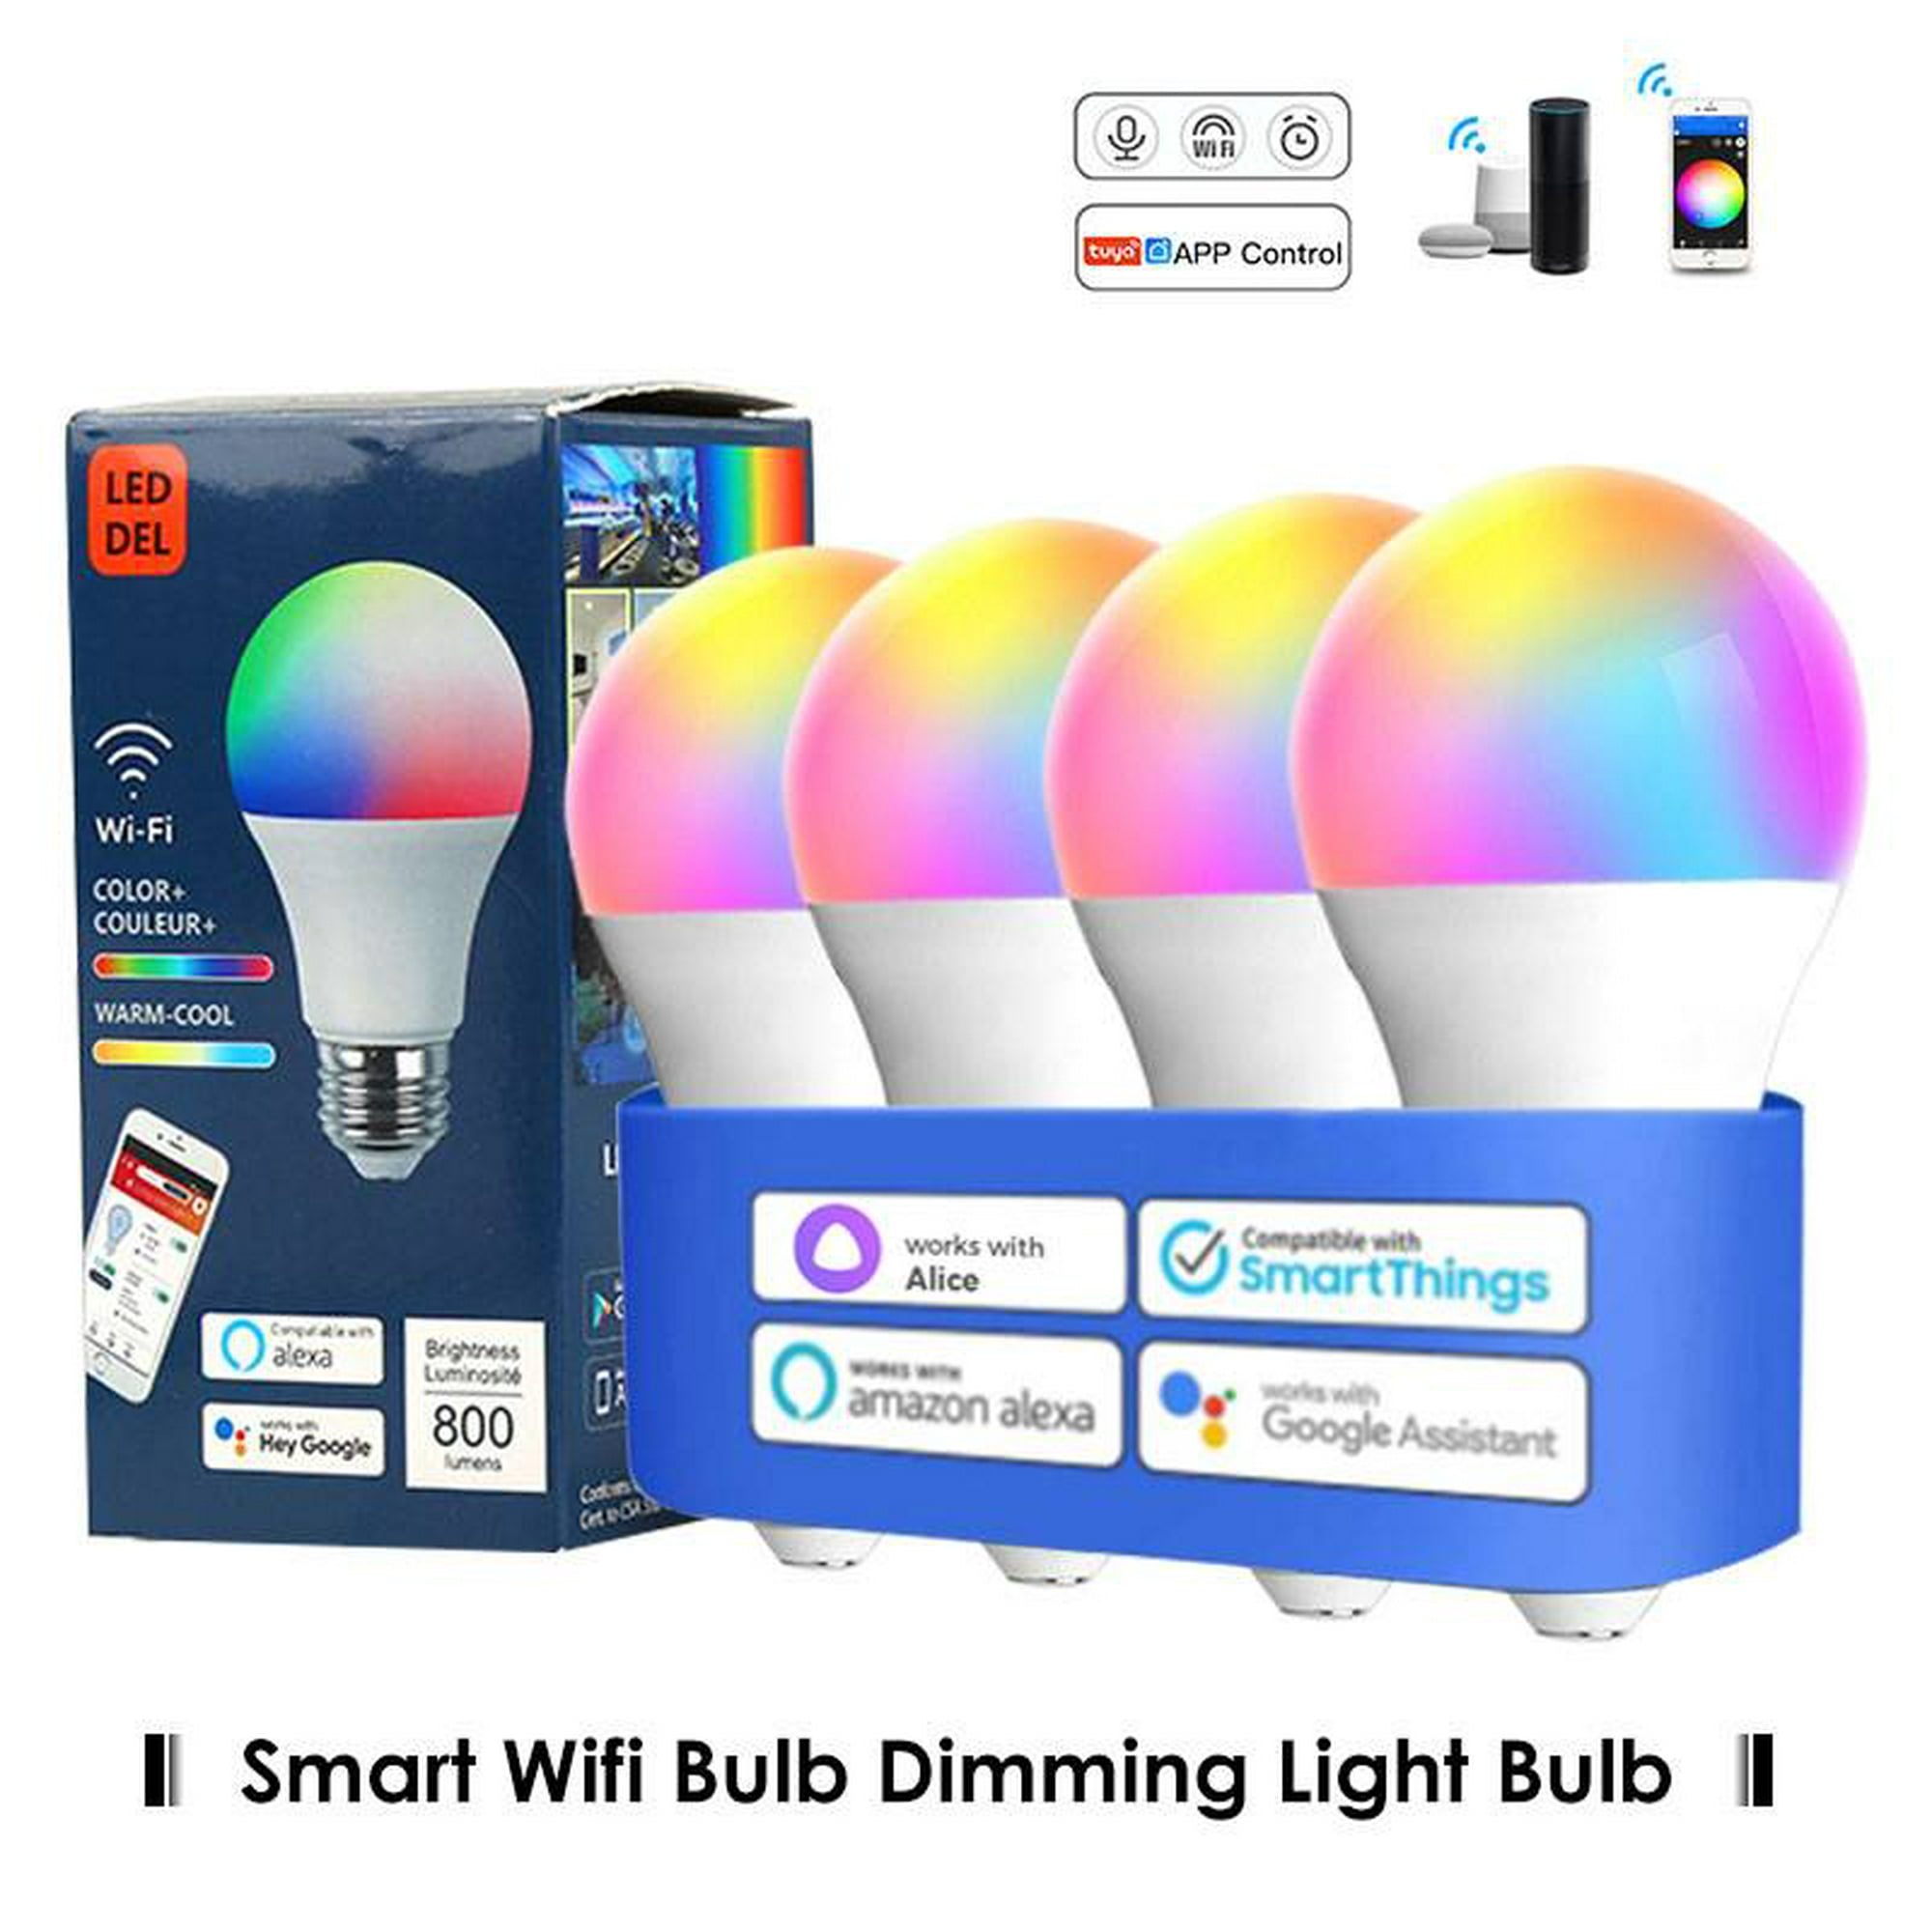 Comprar Bombilla LED inteligente con WiFi, 5W, E14, RGB + W + C, lámpara  LED con aplicación que funciona con asistente de Google Alexa, Control de  despertador, luz nocturna inteligente